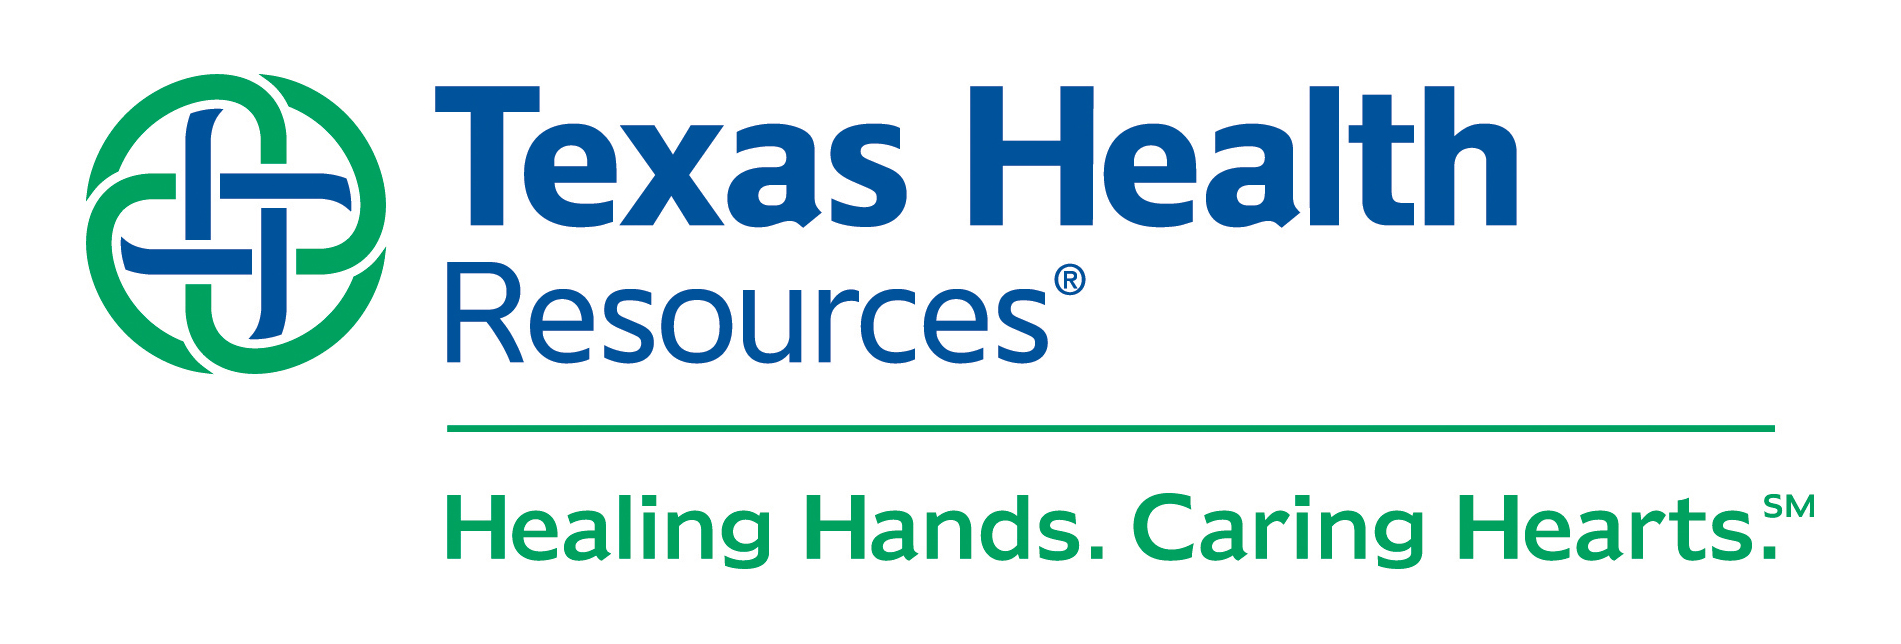 Texas Health Resources Internal Branding & Employee Experience | Austin 